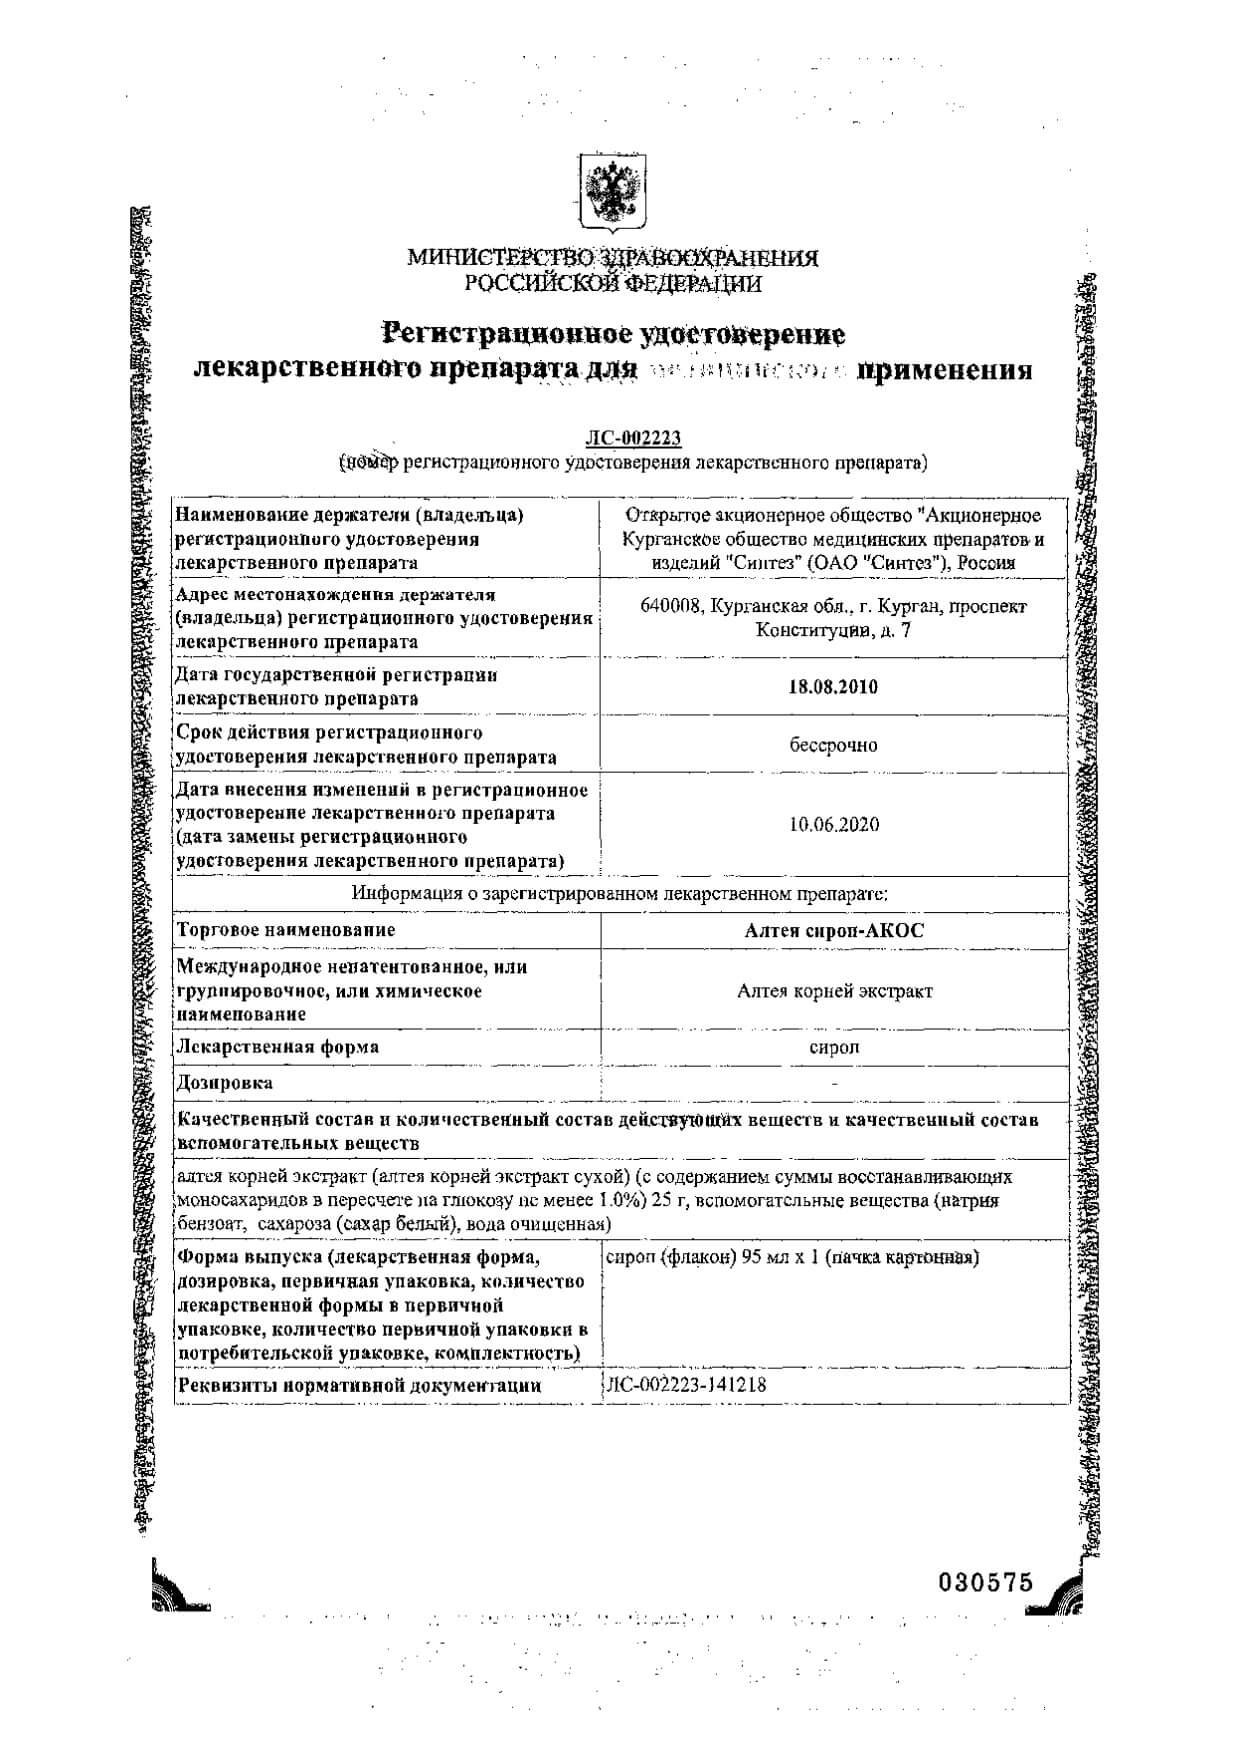 Алтея сироп-акос 95мл: сертификат